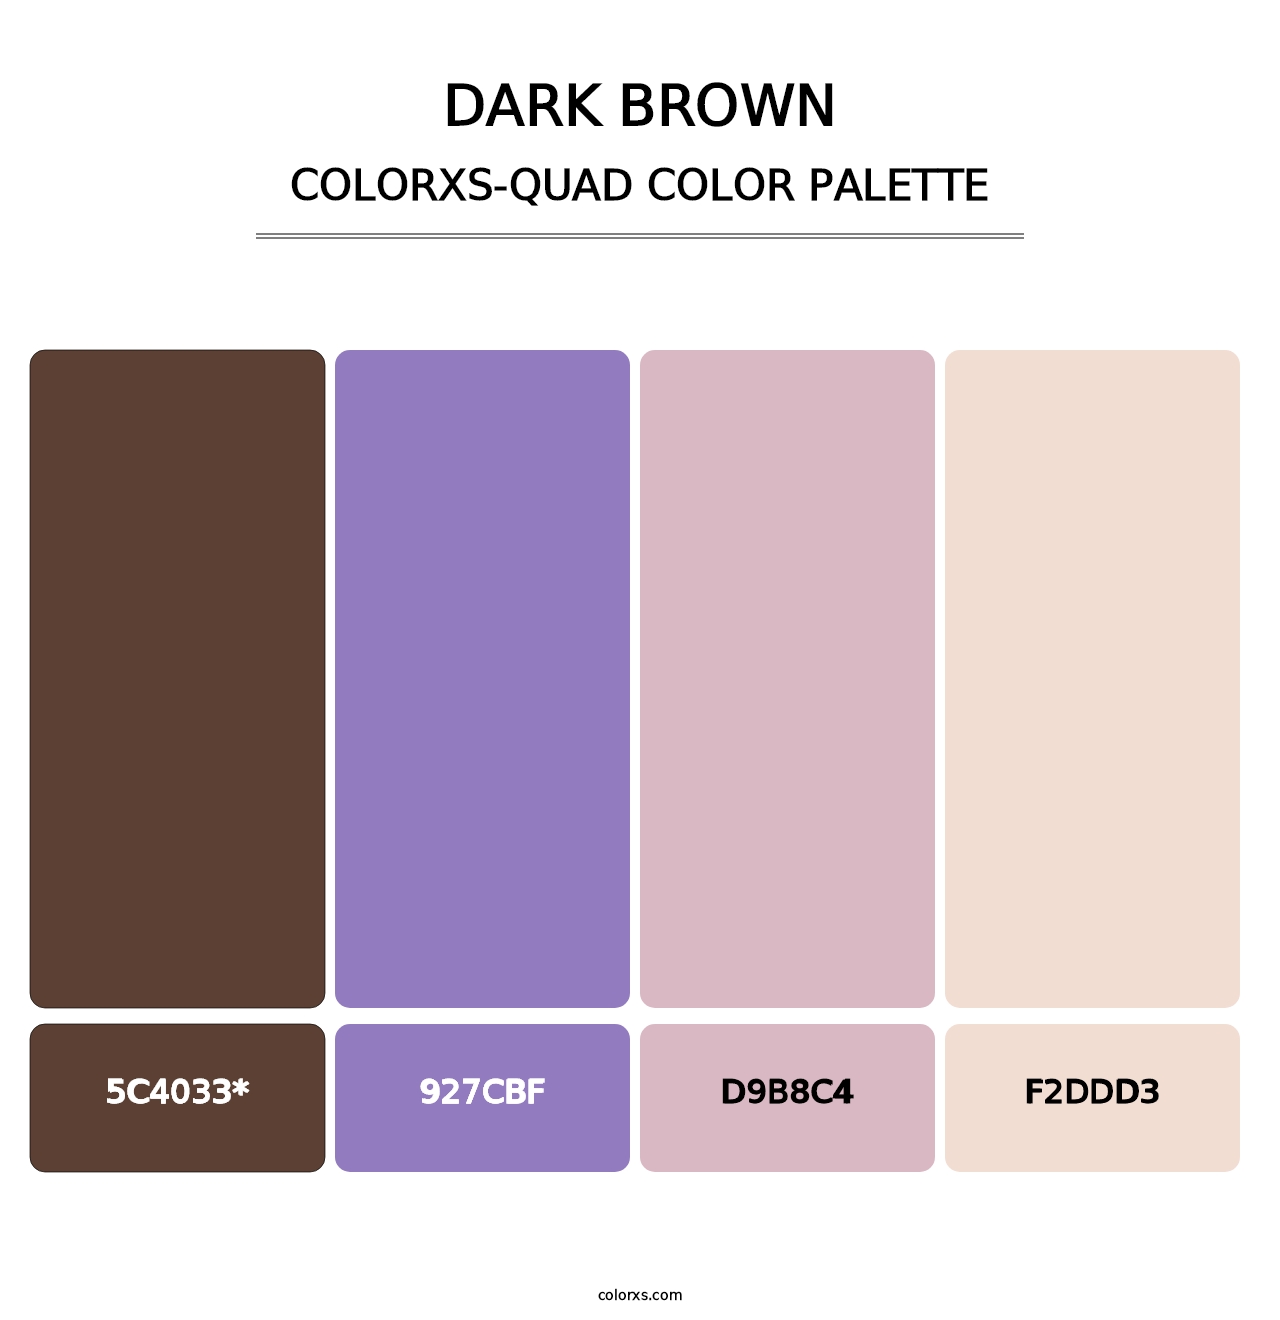 Dark Brown - Colorxs Quad Palette